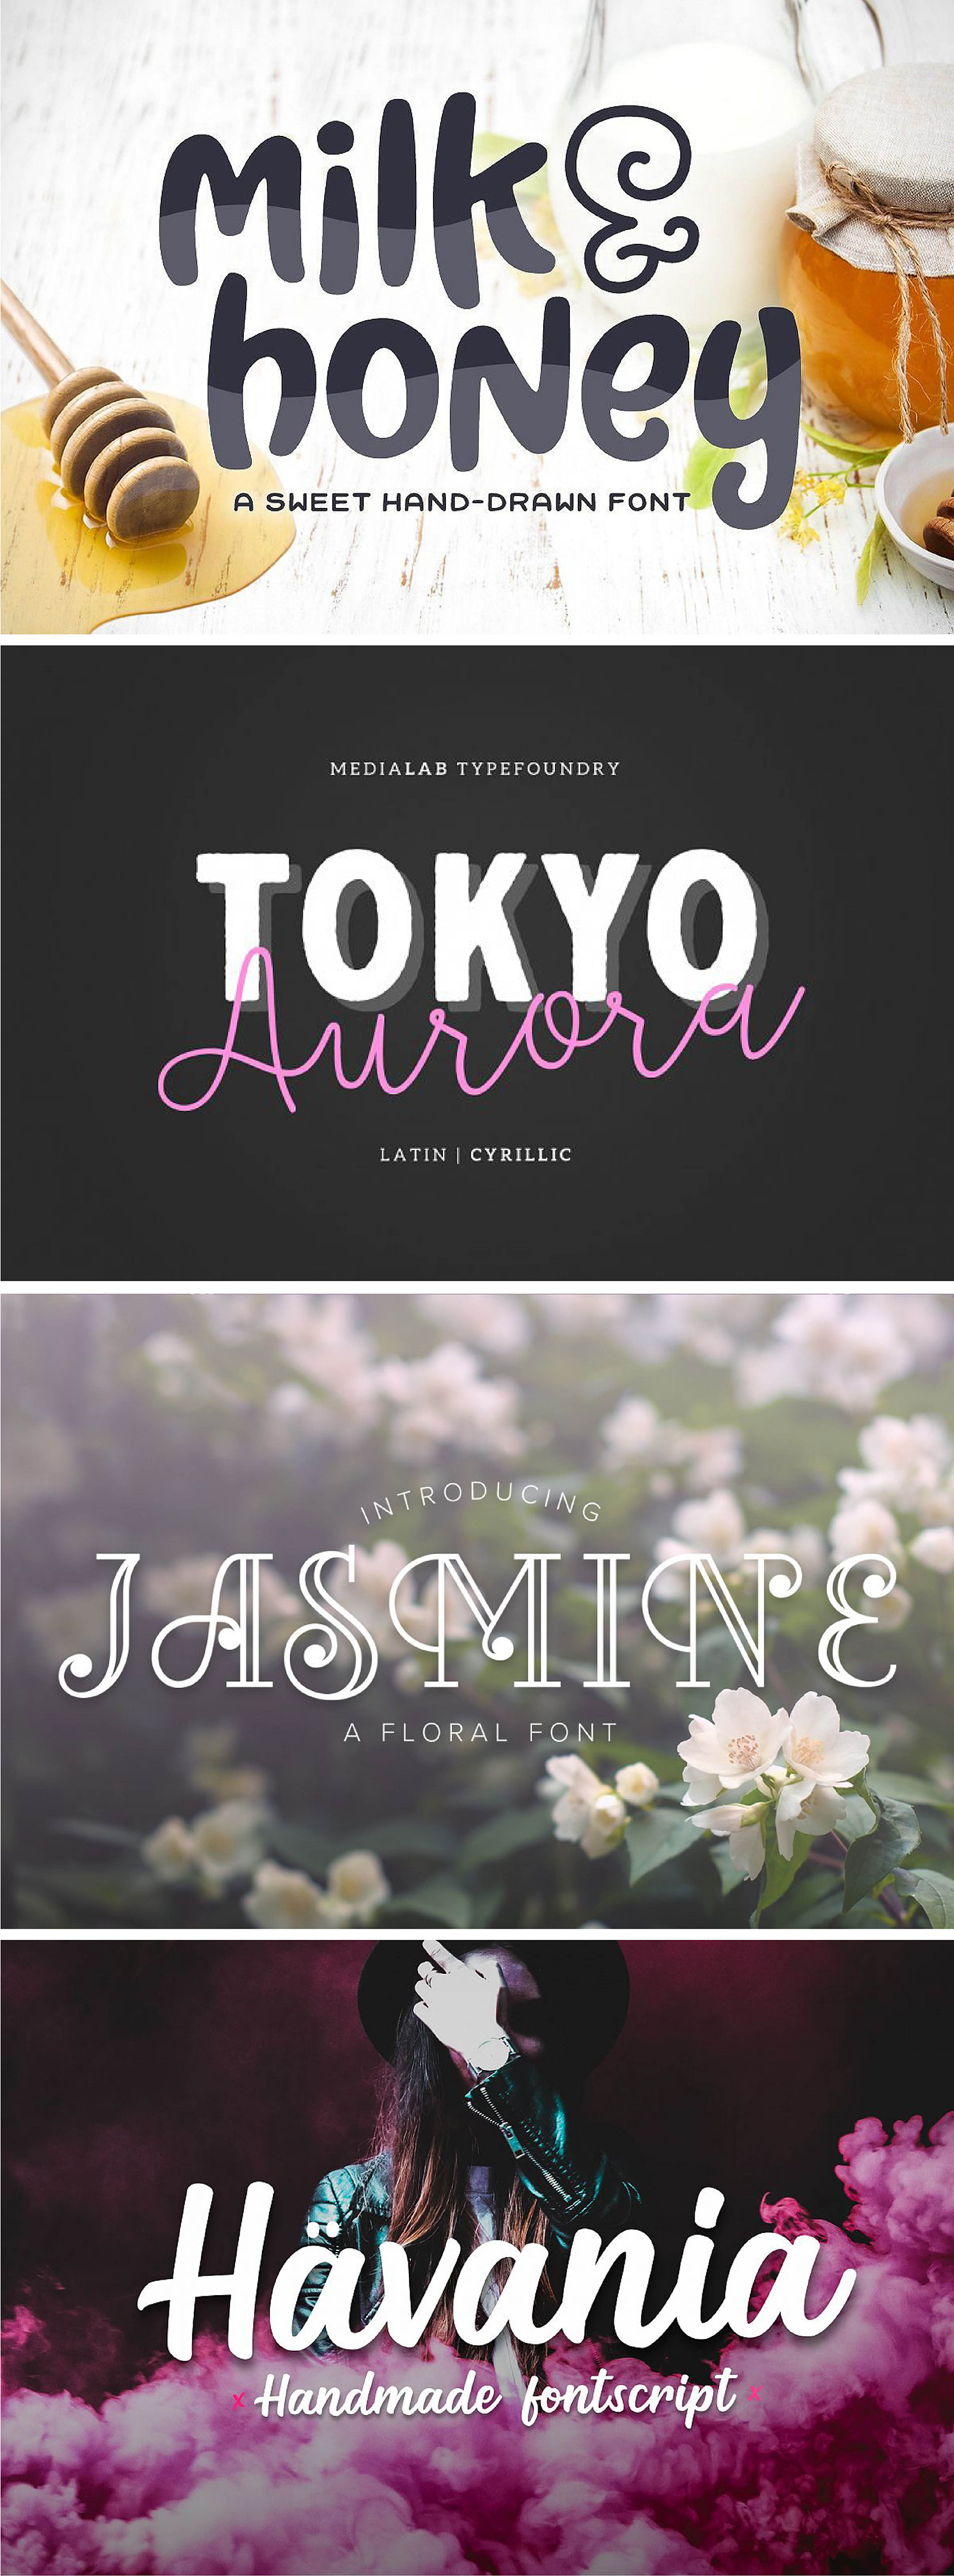 hand drawn, script, bold, floral font typefaces